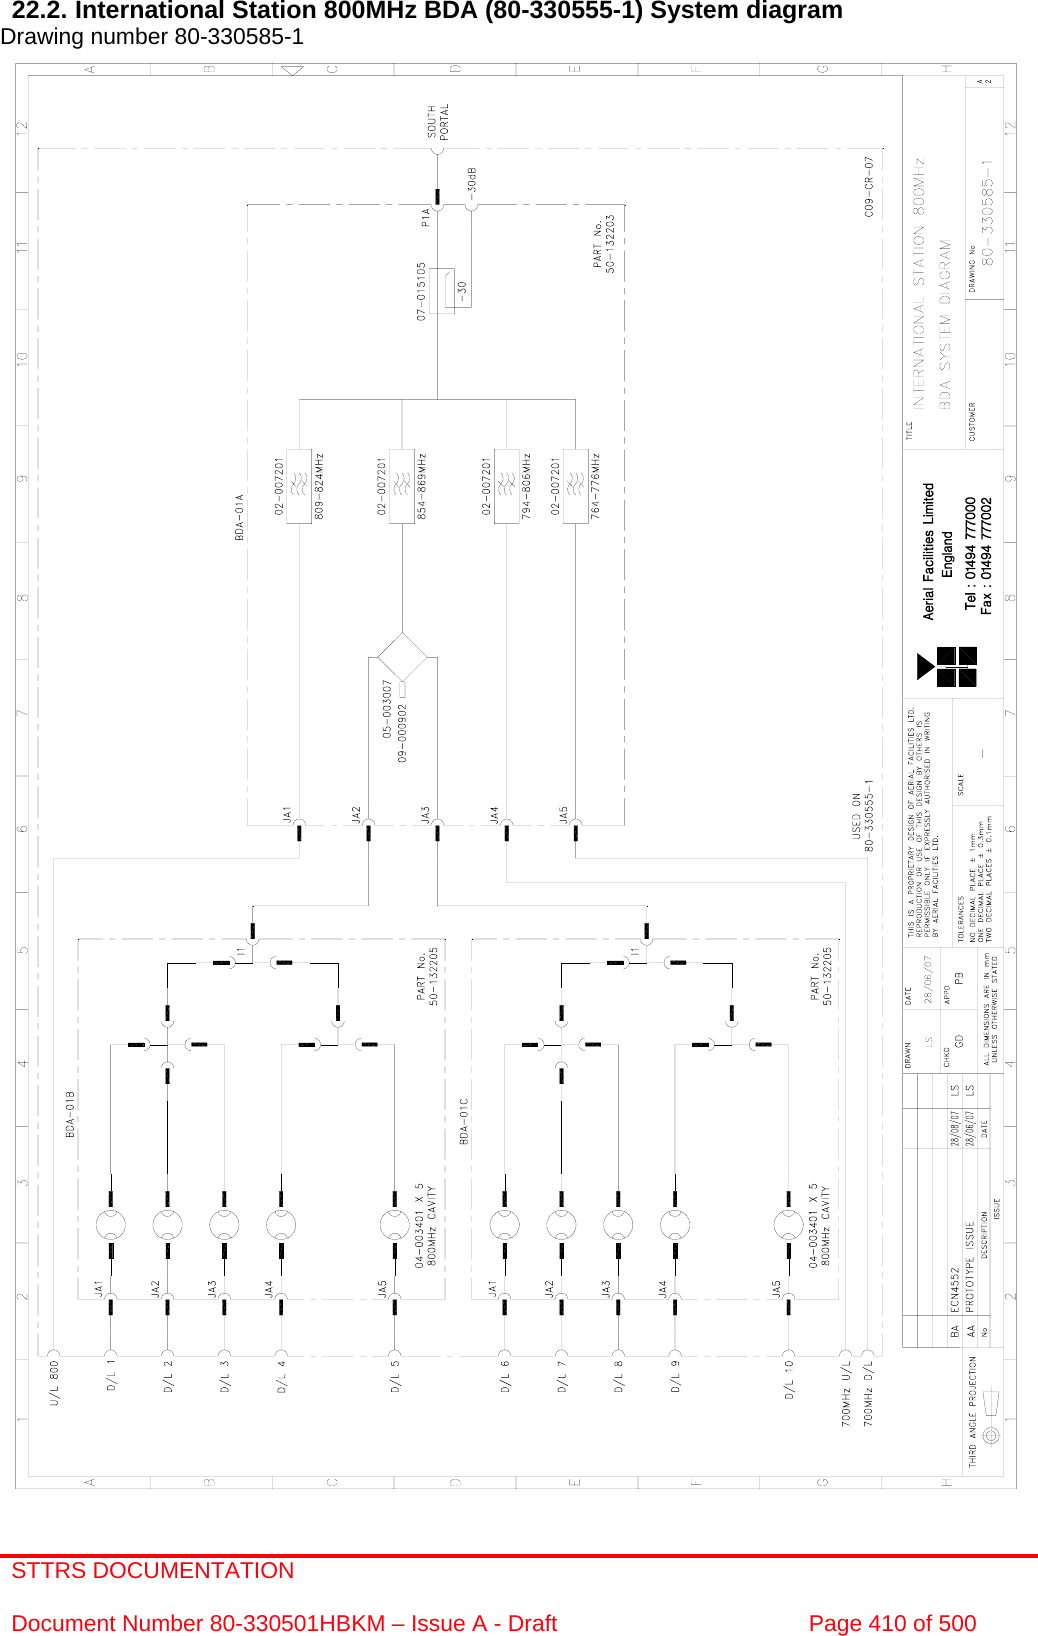 STTRS DOCUMENTATION  Document Number 80-330501HBKM – Issue A - Draft  Page 410 of 500   22.2. International Station 800MHz BDA (80-330555-1) System diagram Drawing number 80-330585-1                                                       